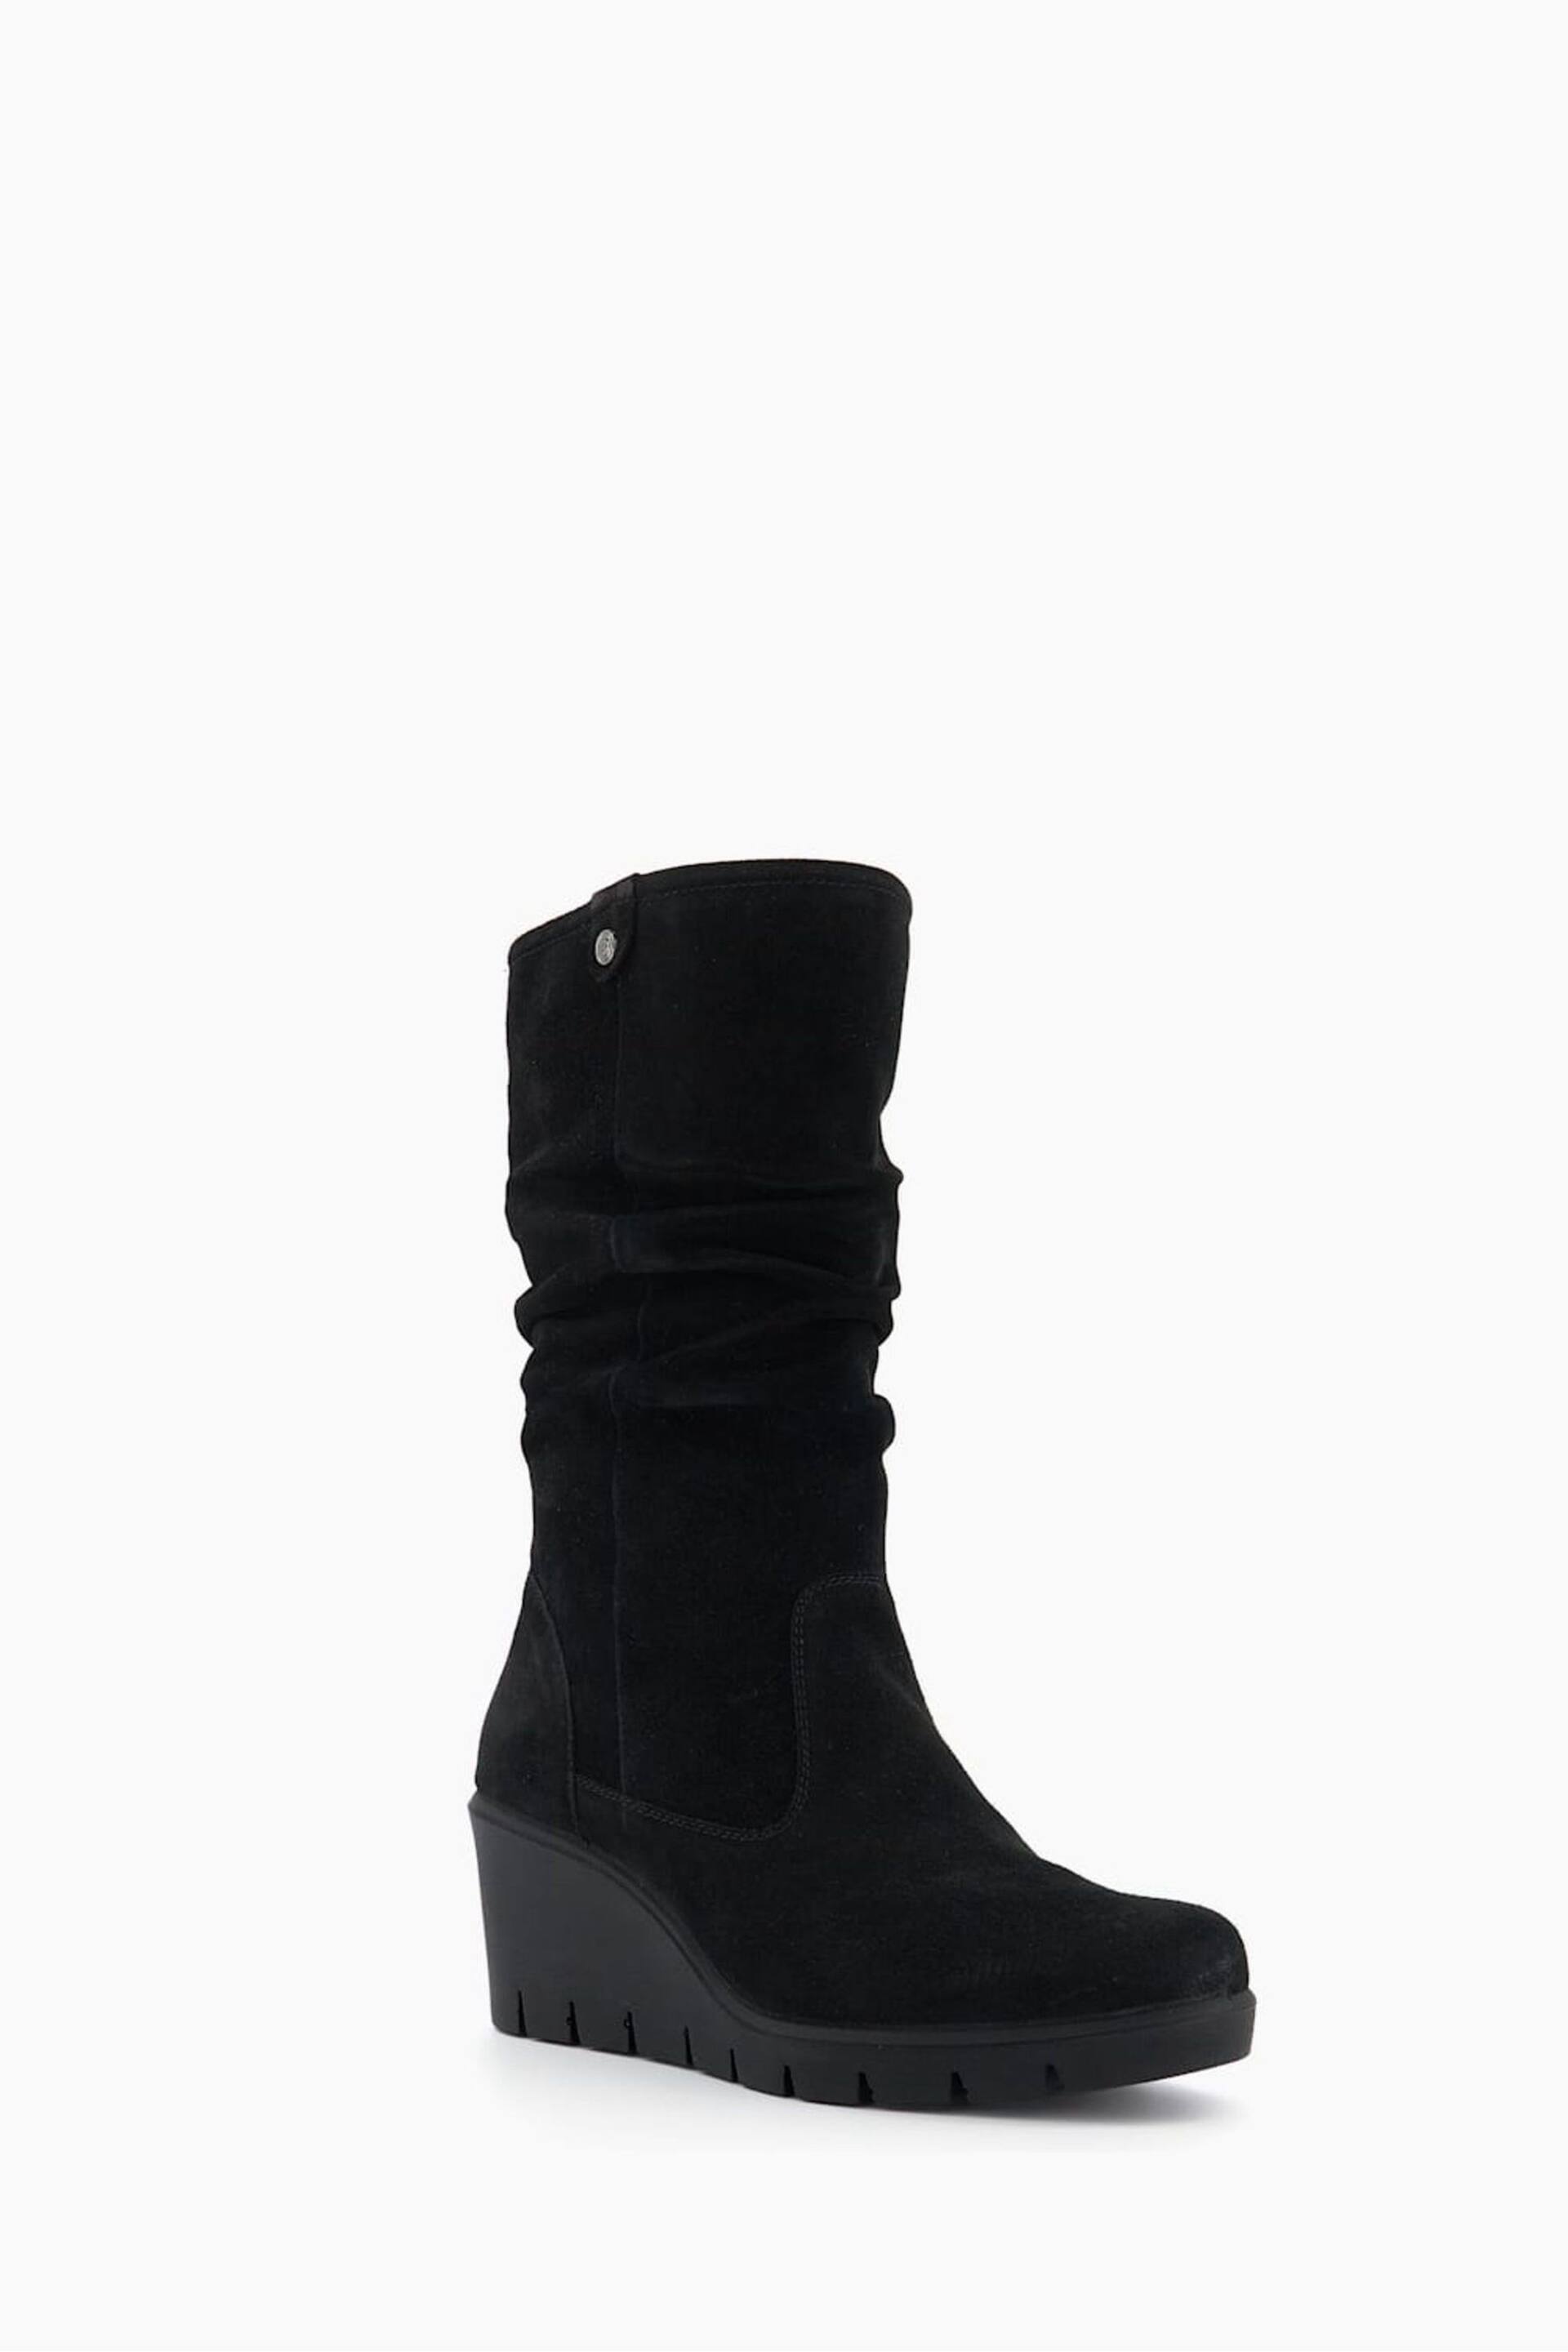 Dune London Black Ruched Tasha Wedge Comfort Boots - Image 3 of 5